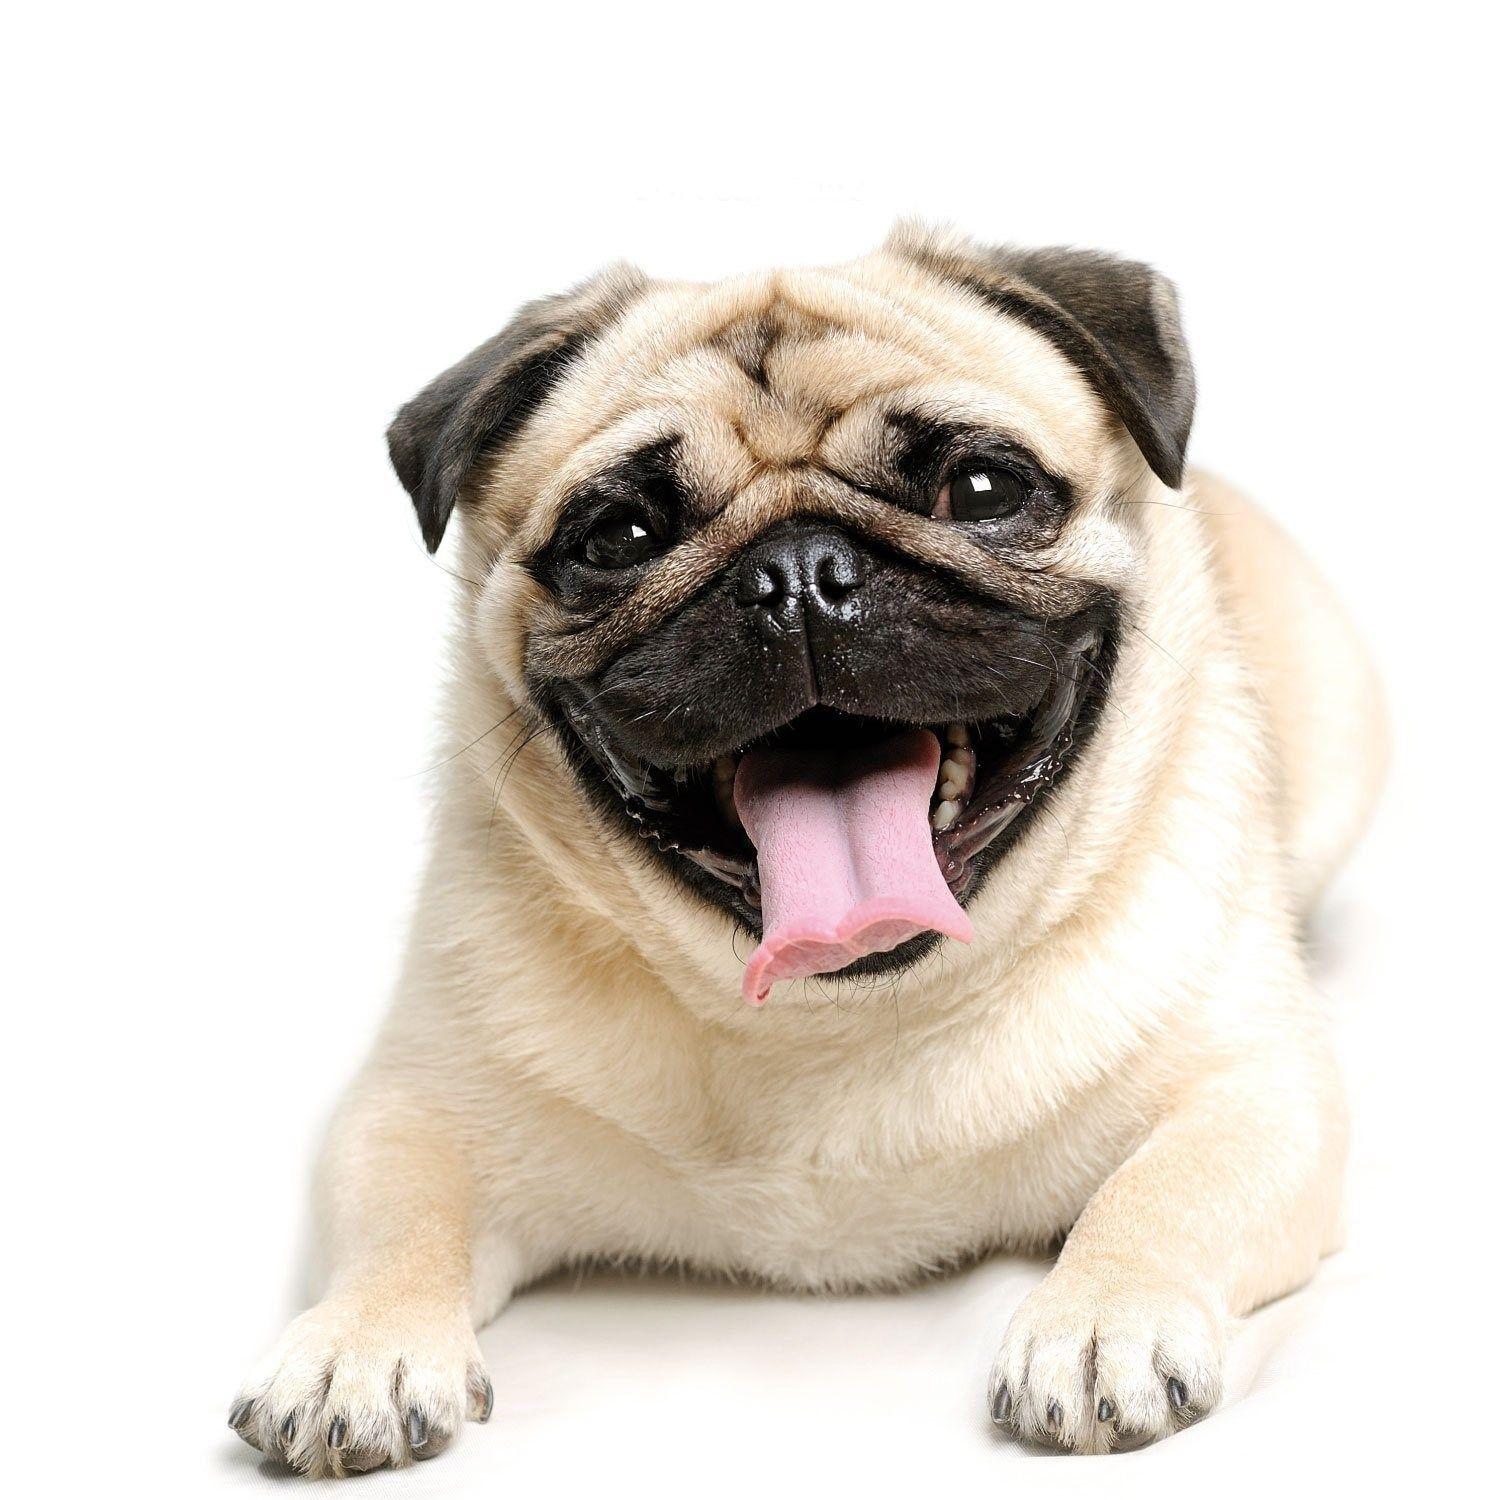 Pug Wallpaper, Screensaver, Background. Smart dog, Pug facts, Cute pugs